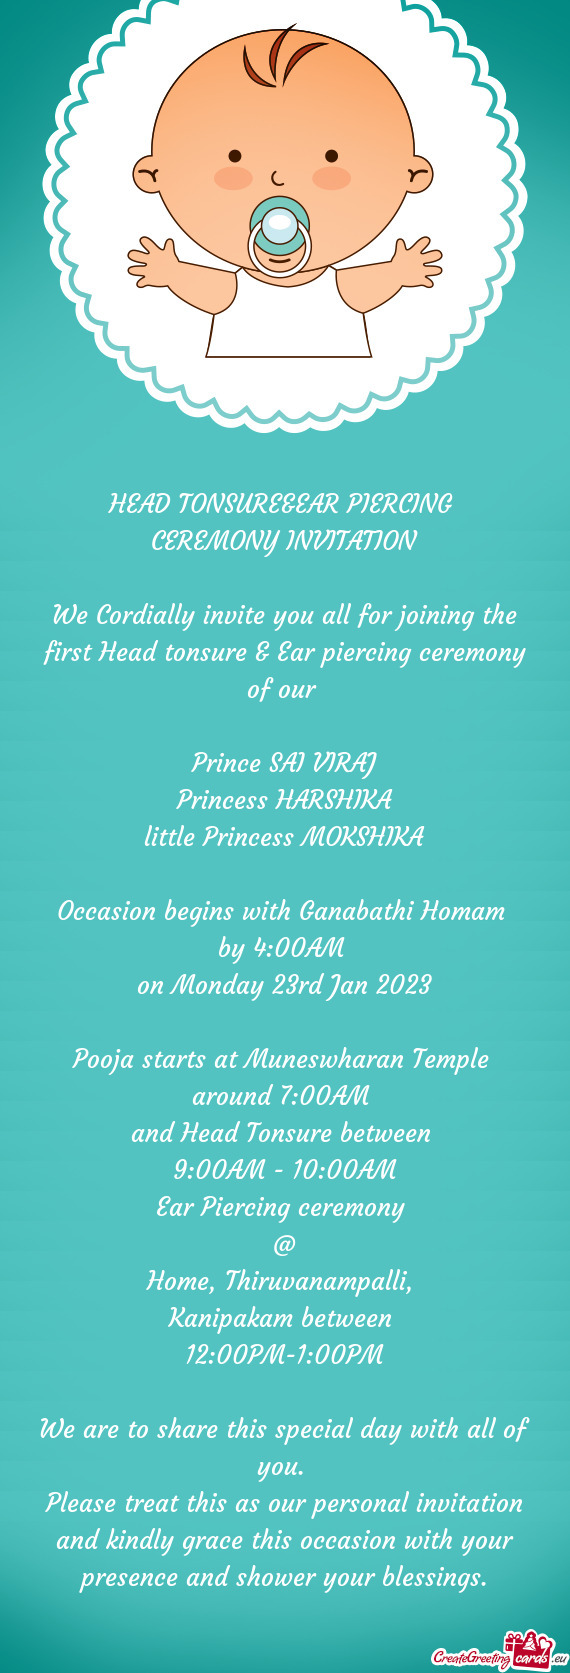 Occasion begins with Ganabathi Homam